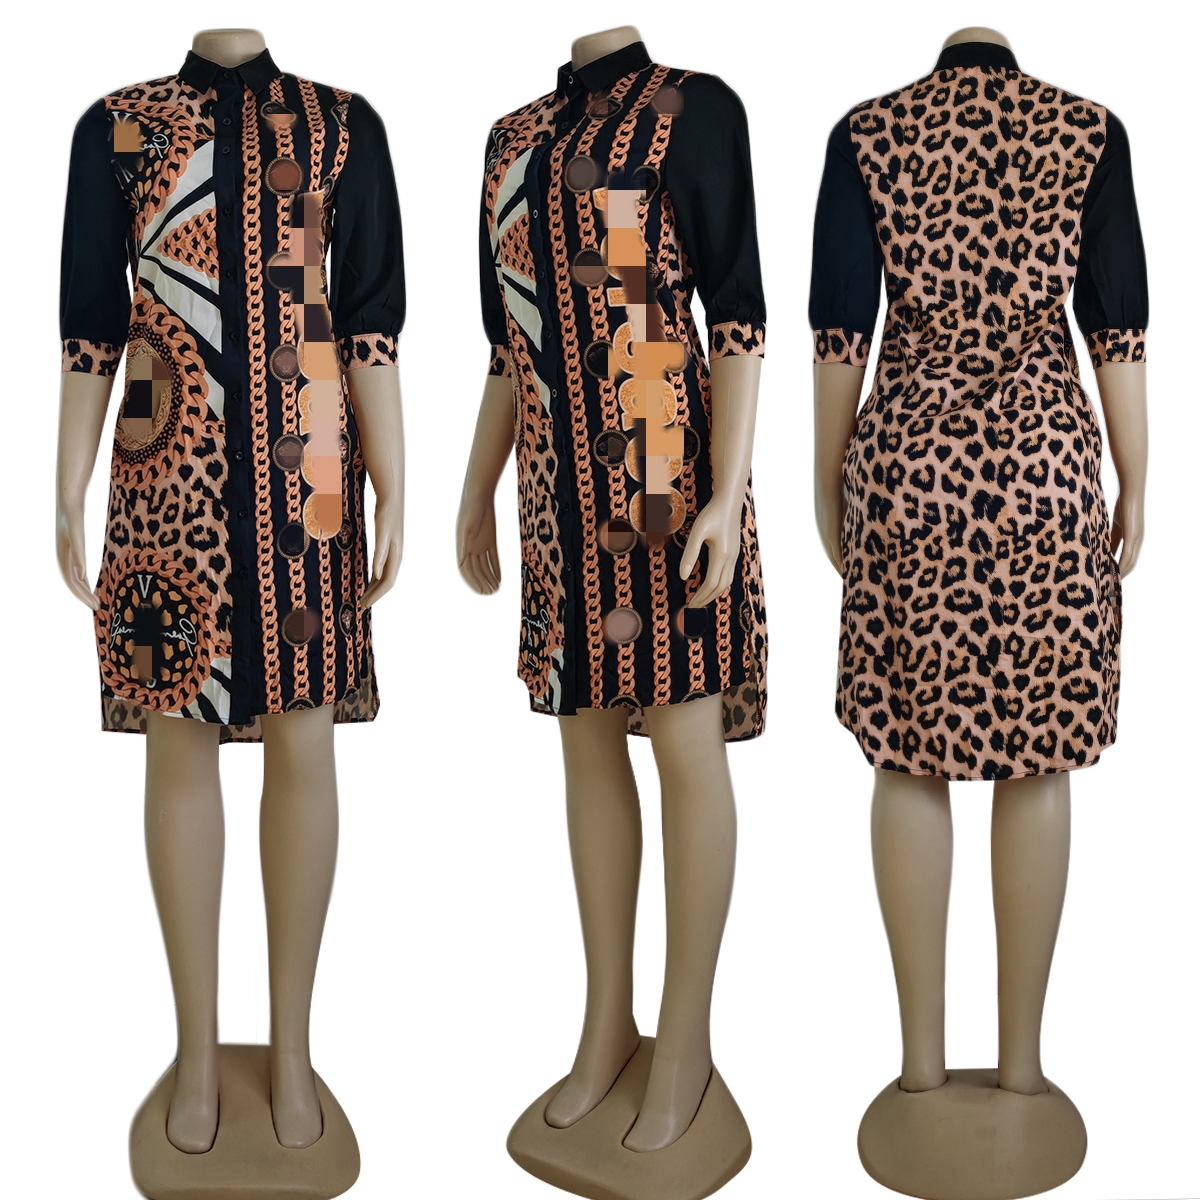 Leopard Print Shirt Dresses Women Casual Lapel Neck Long Sleeve Shirt Tops Free Ship